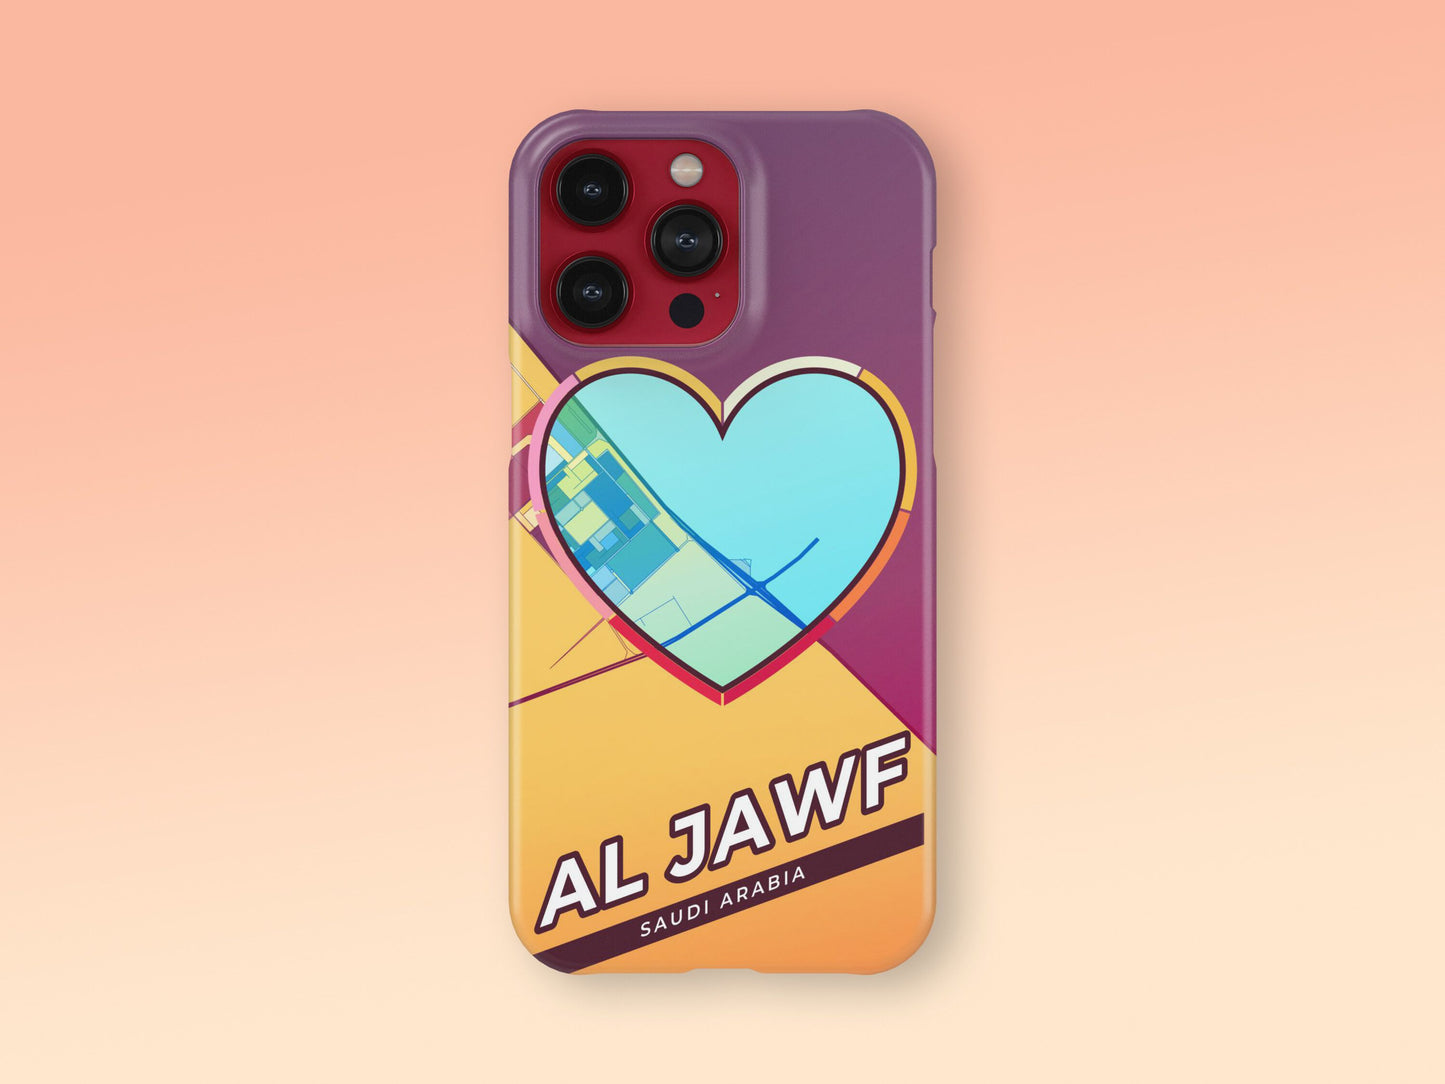 Al Jawf Saudi Arabia slim phone case with colorful icon. Birthday, wedding or housewarming gift. Couple match cases. 2